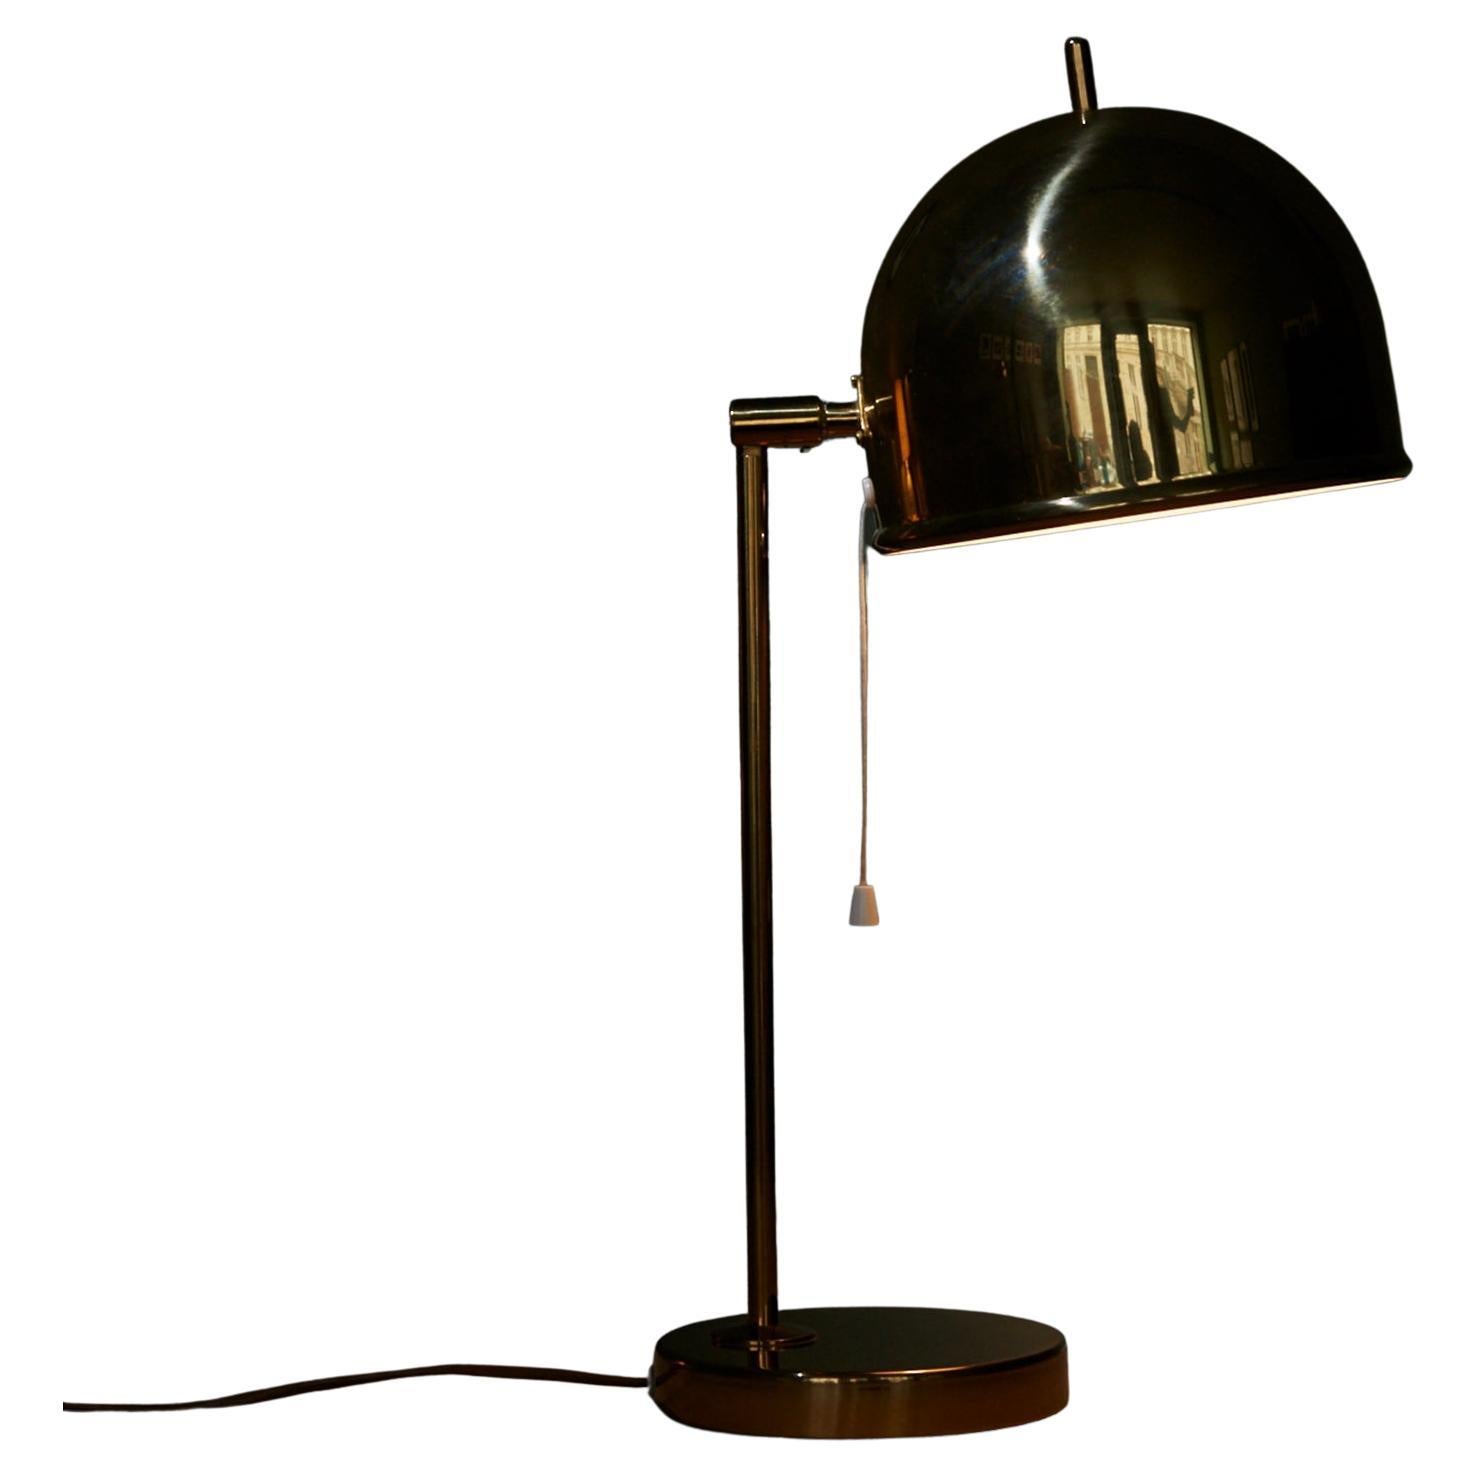 Table Lamp, “B-075”, Bergbom For Sale